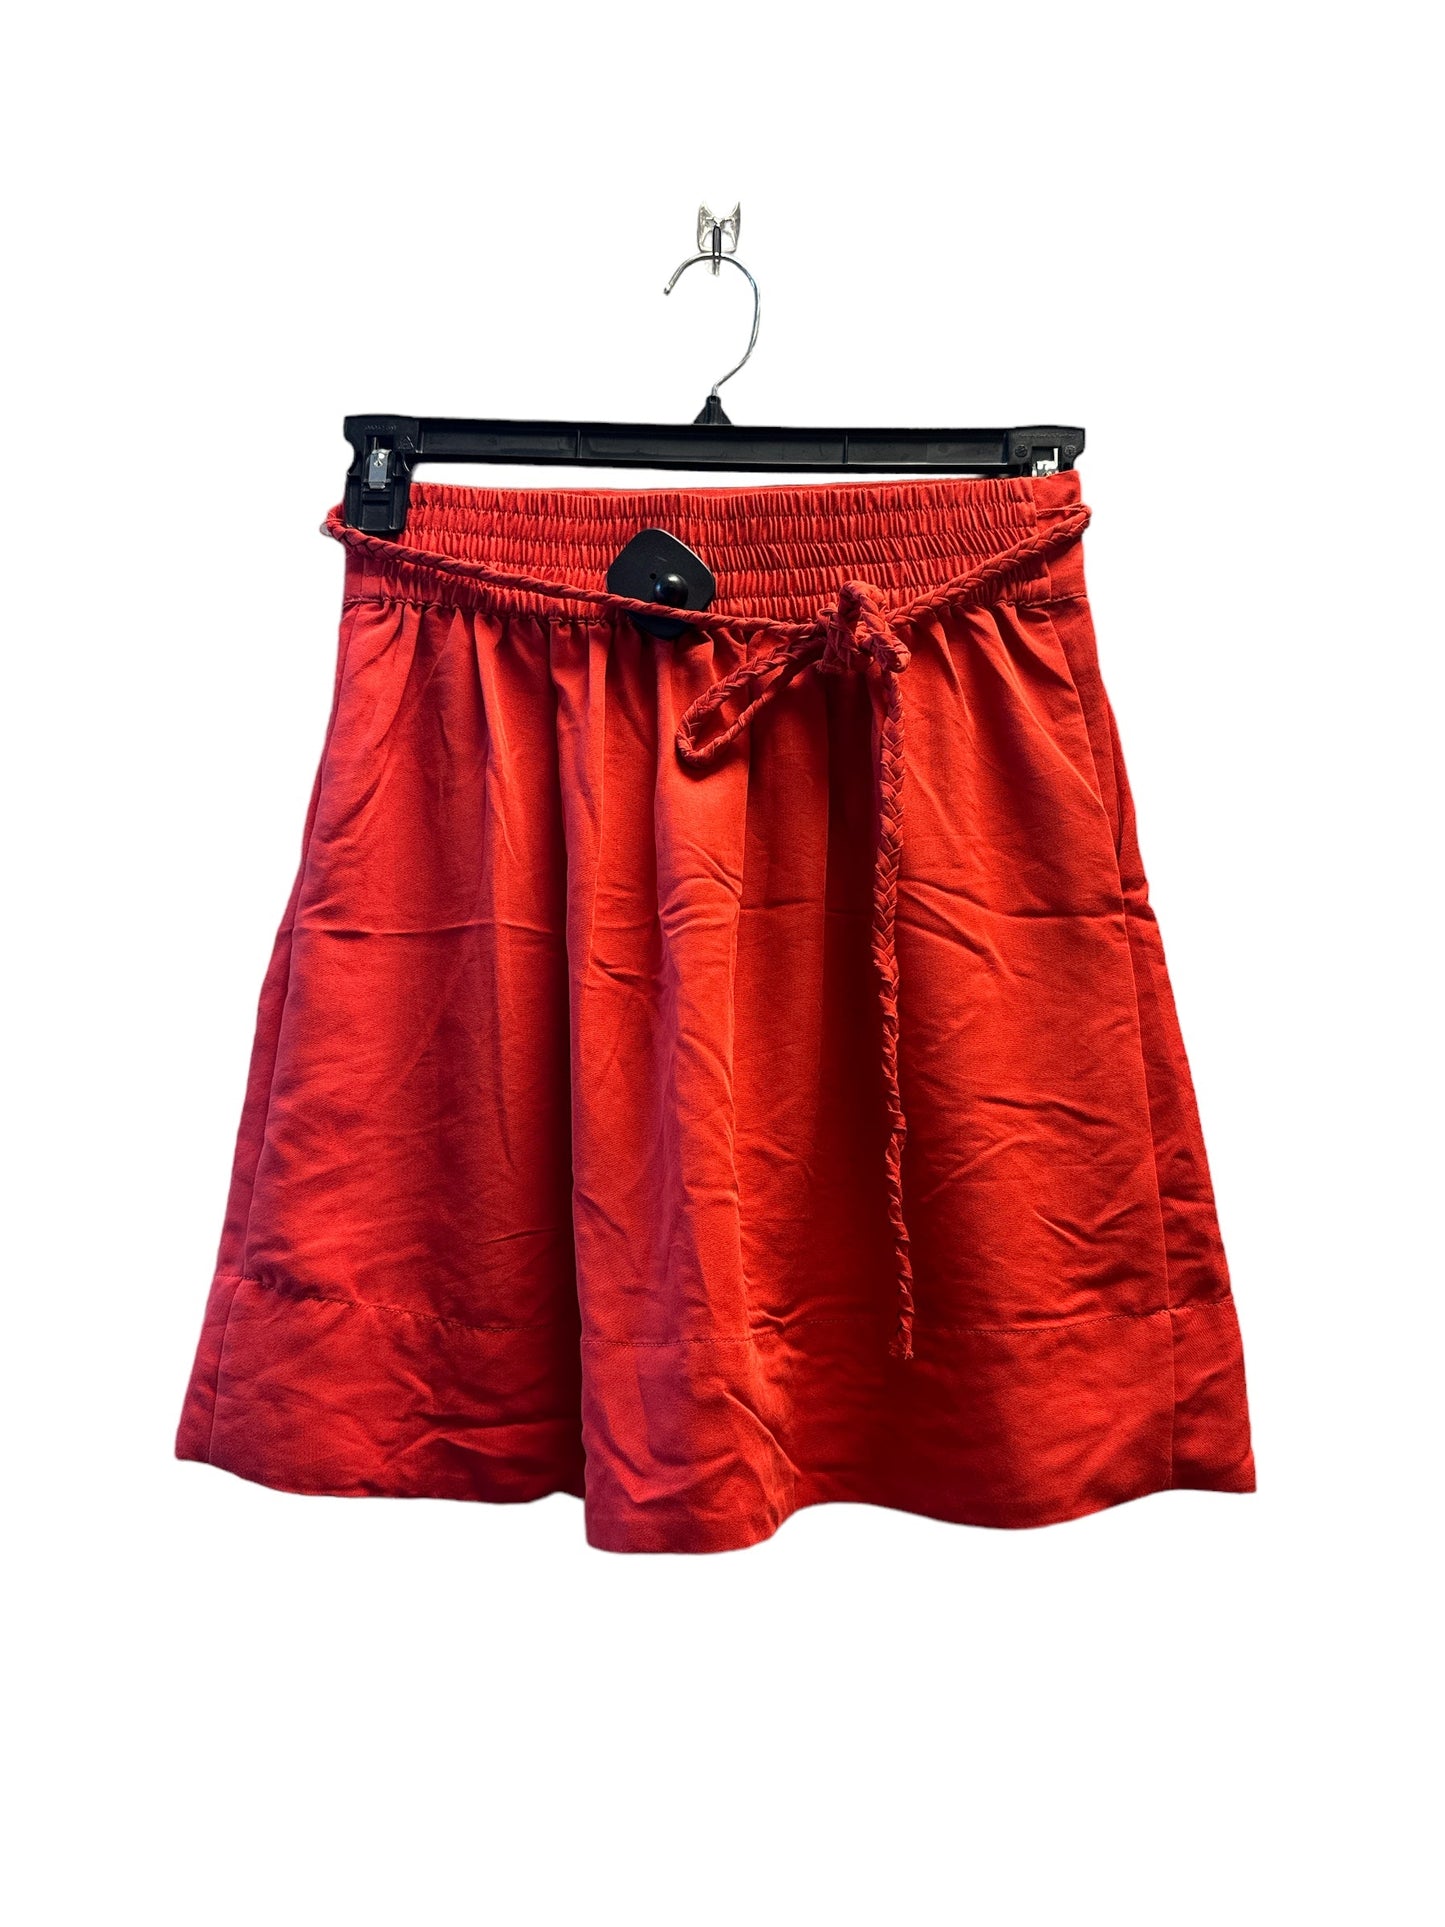 Skirt Mini & Short By Tommy Hilfiger  Size: 2